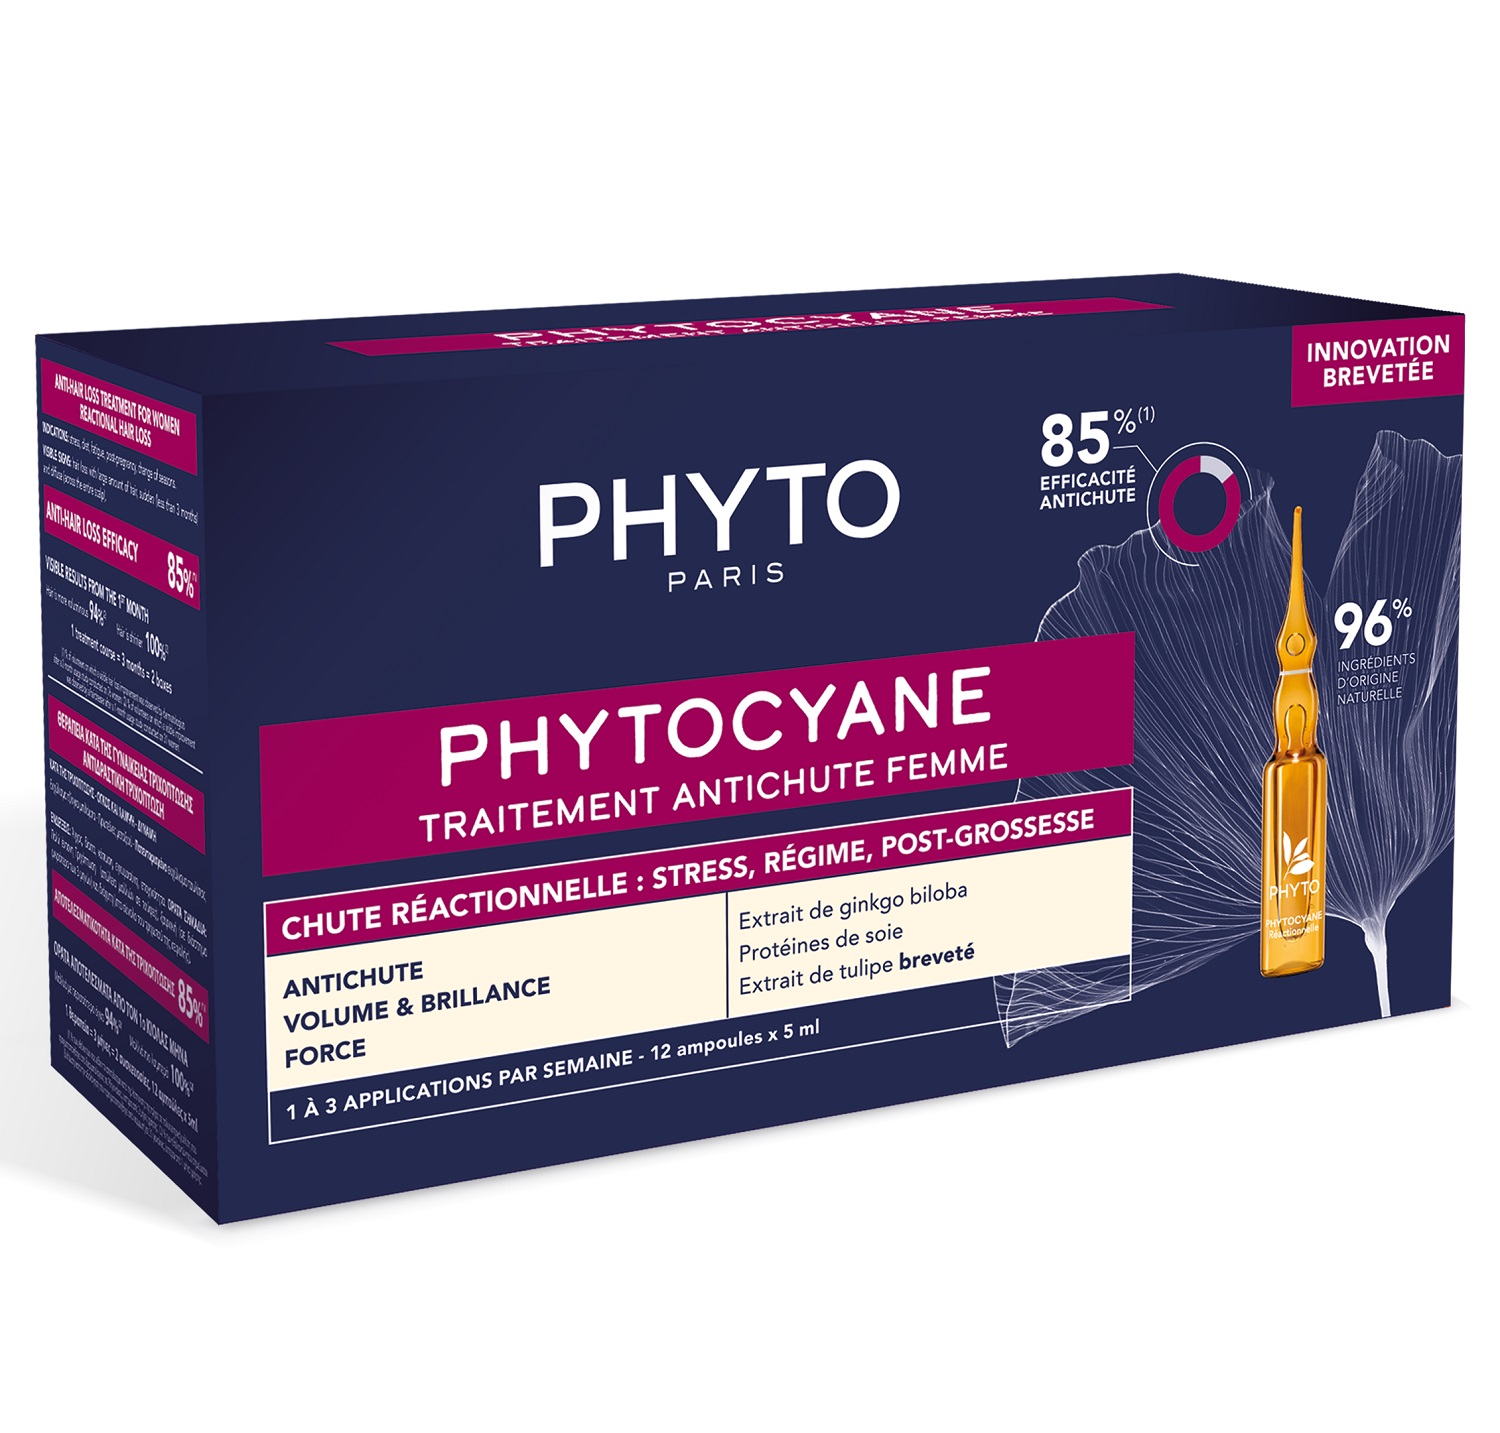 Phyto Сыворотка против выпадения волос для женщин, 12 ампул х 5 мл (Phyto, Phytocyane) phyto набор для женщин сыворотка от выпадения волос 12х 5мл укрепляющий шампунь 100 мл phyto phytocyane